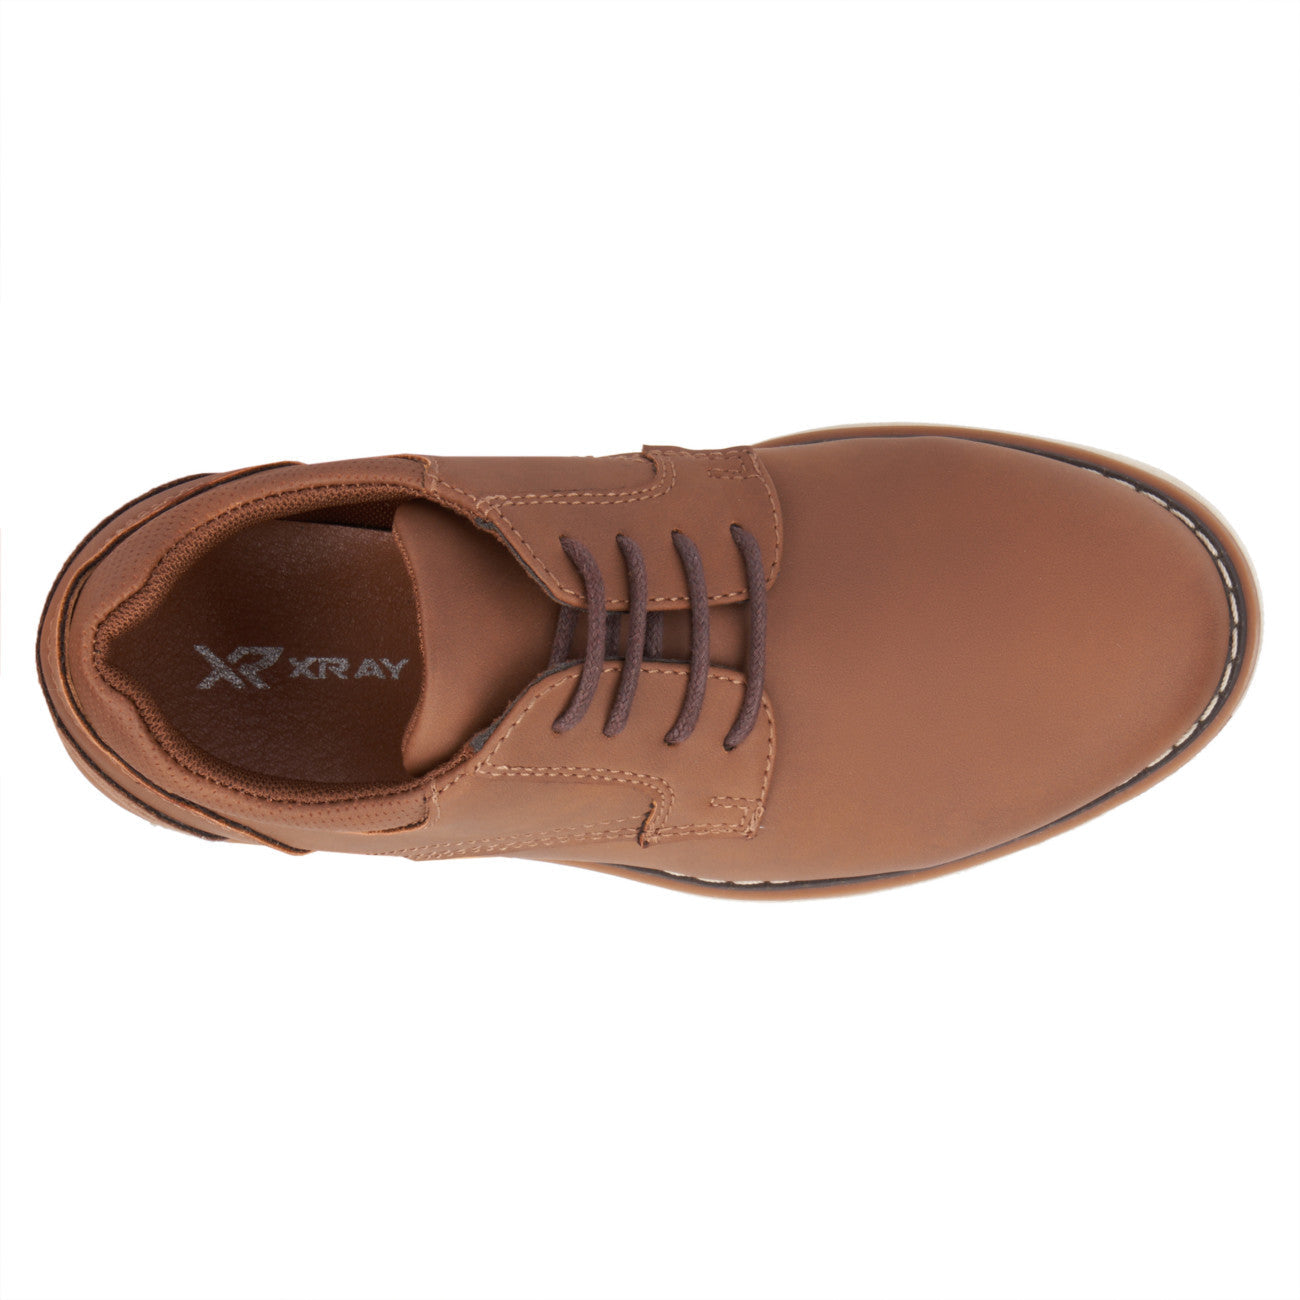 Xray Footwear Boy's Daniel Dress Casual Oxford